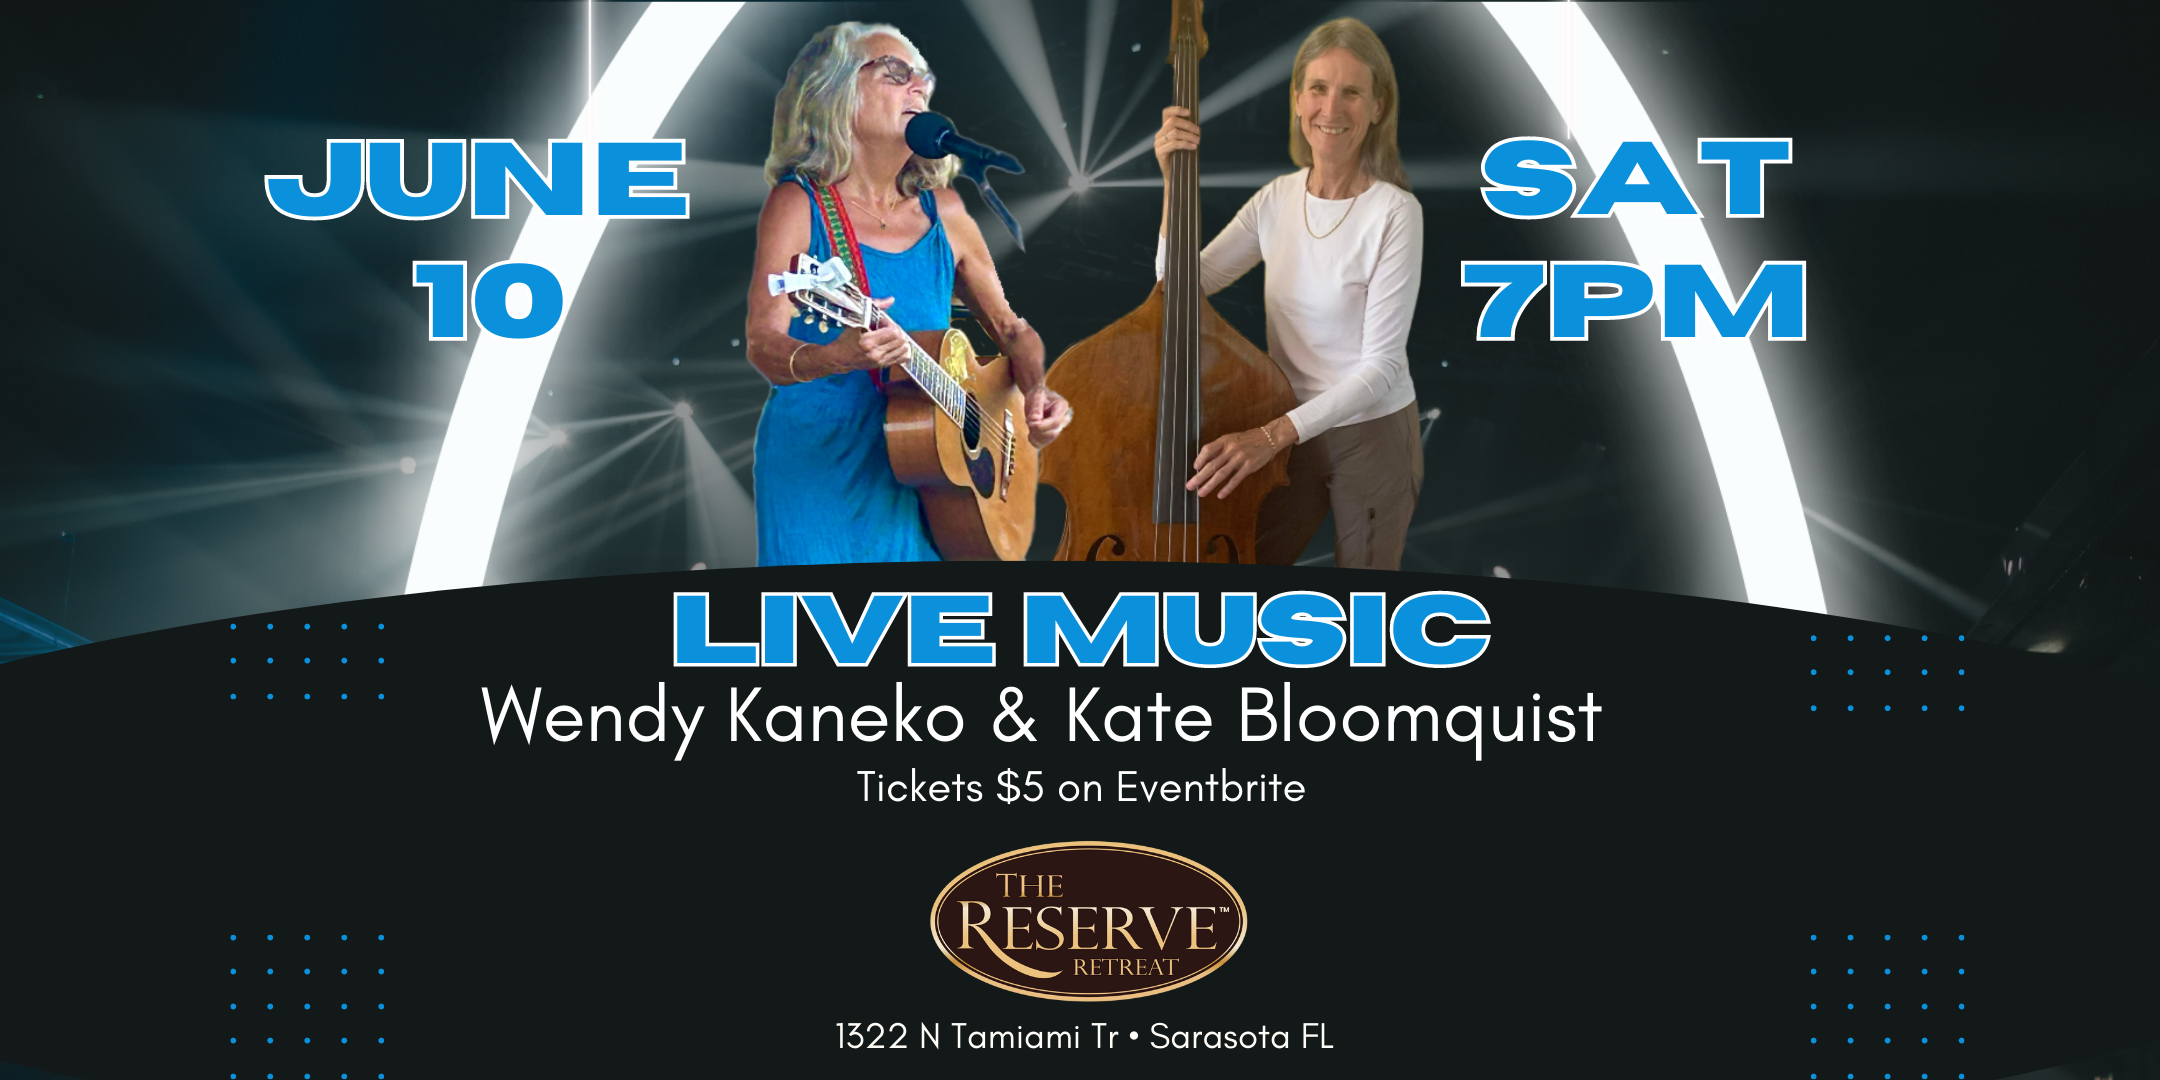 Wendy Kaneko & Kate Bloomquist live at The Reserve Retreat June 10